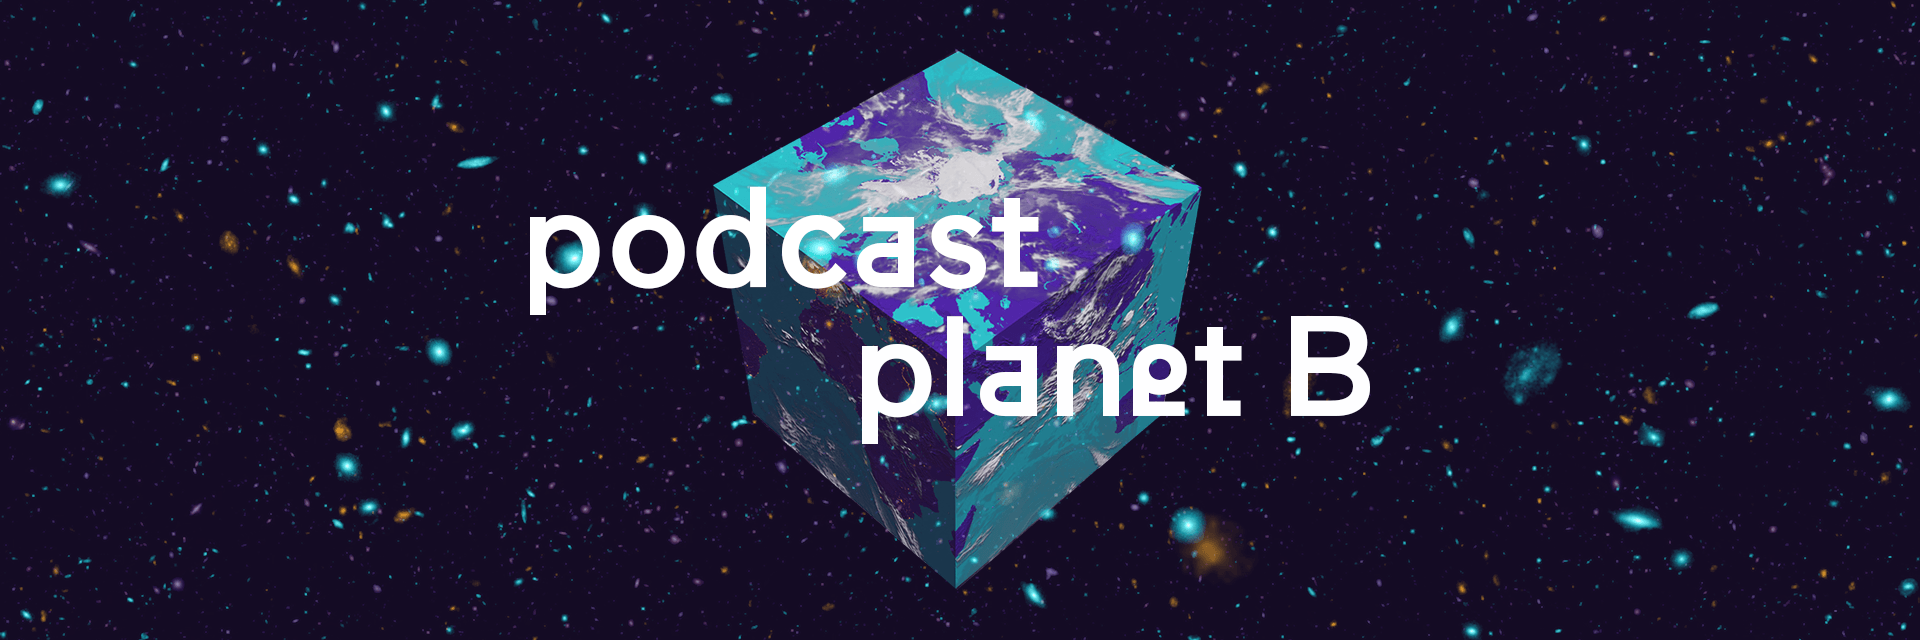 Planet B podcast banner